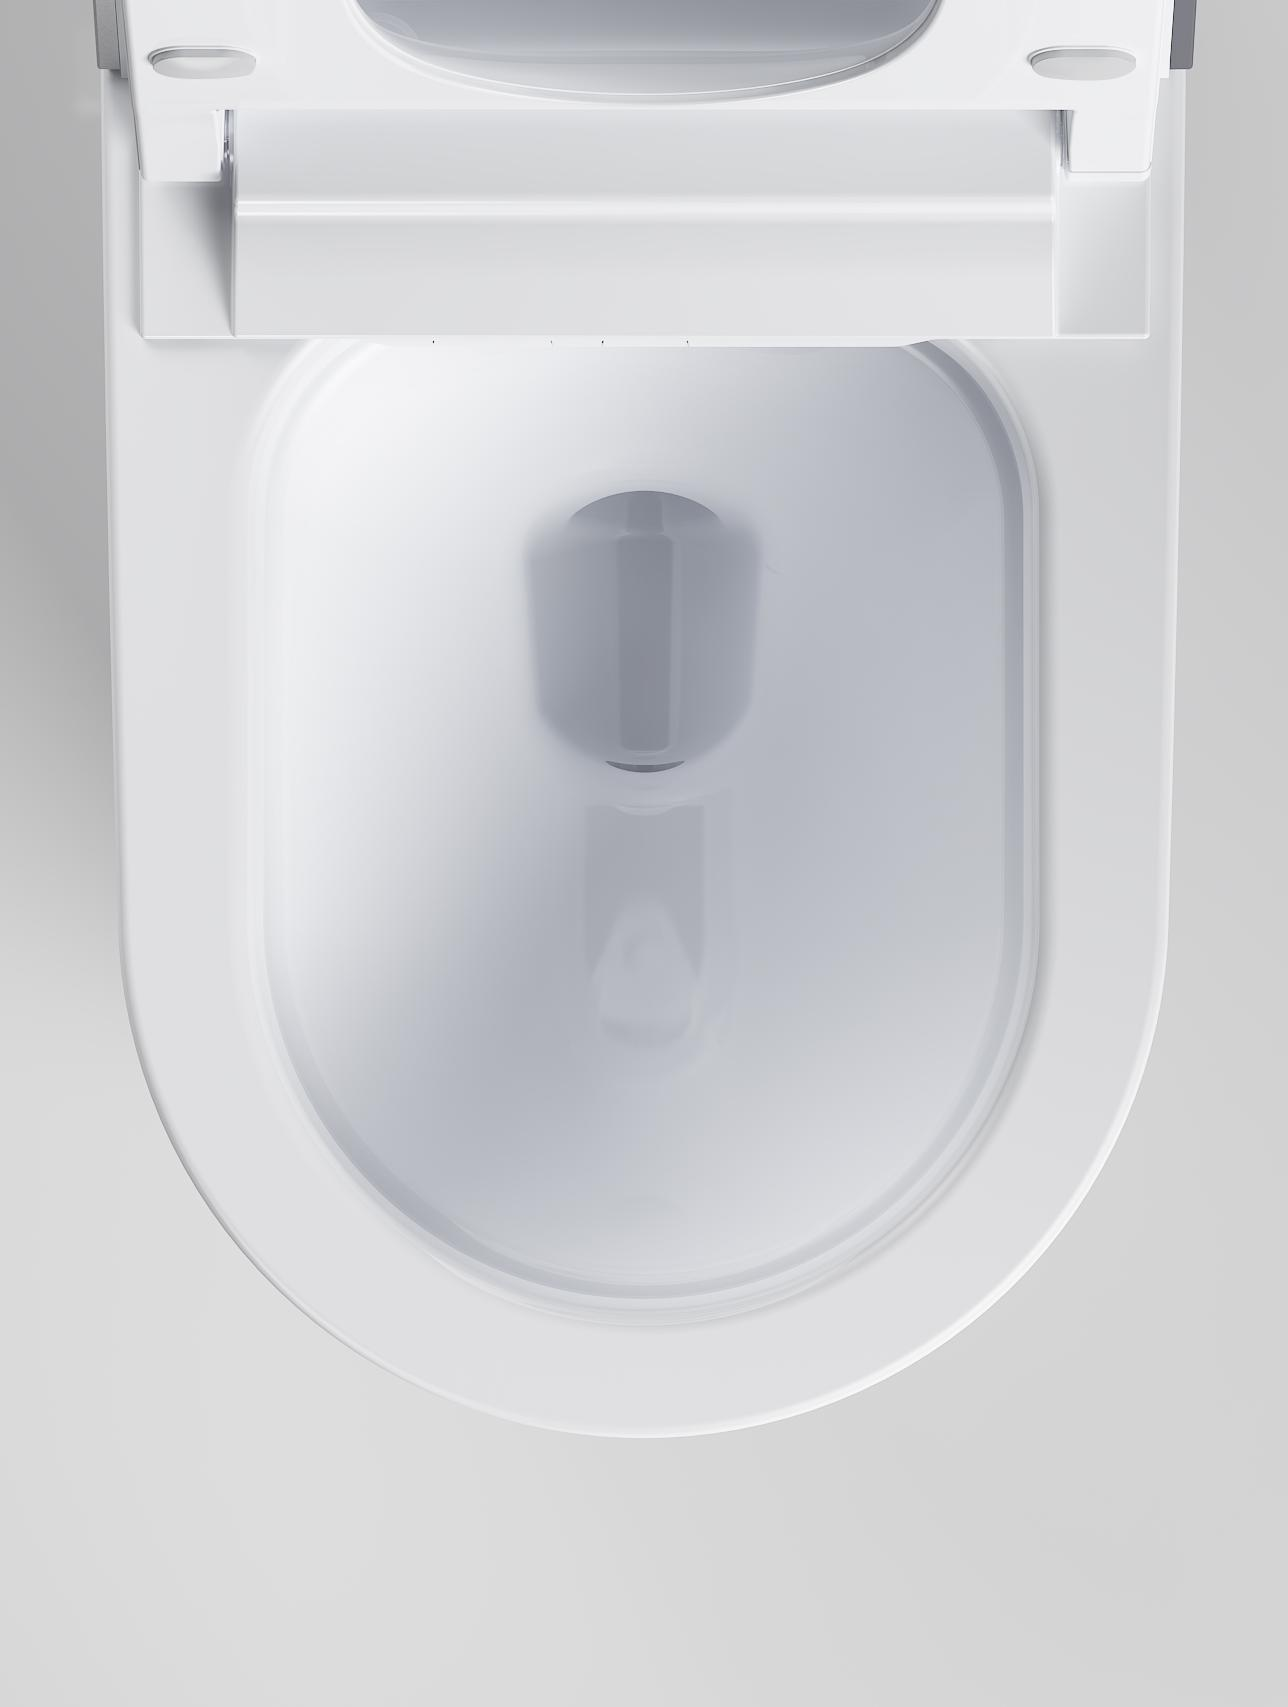 intelligent toilet